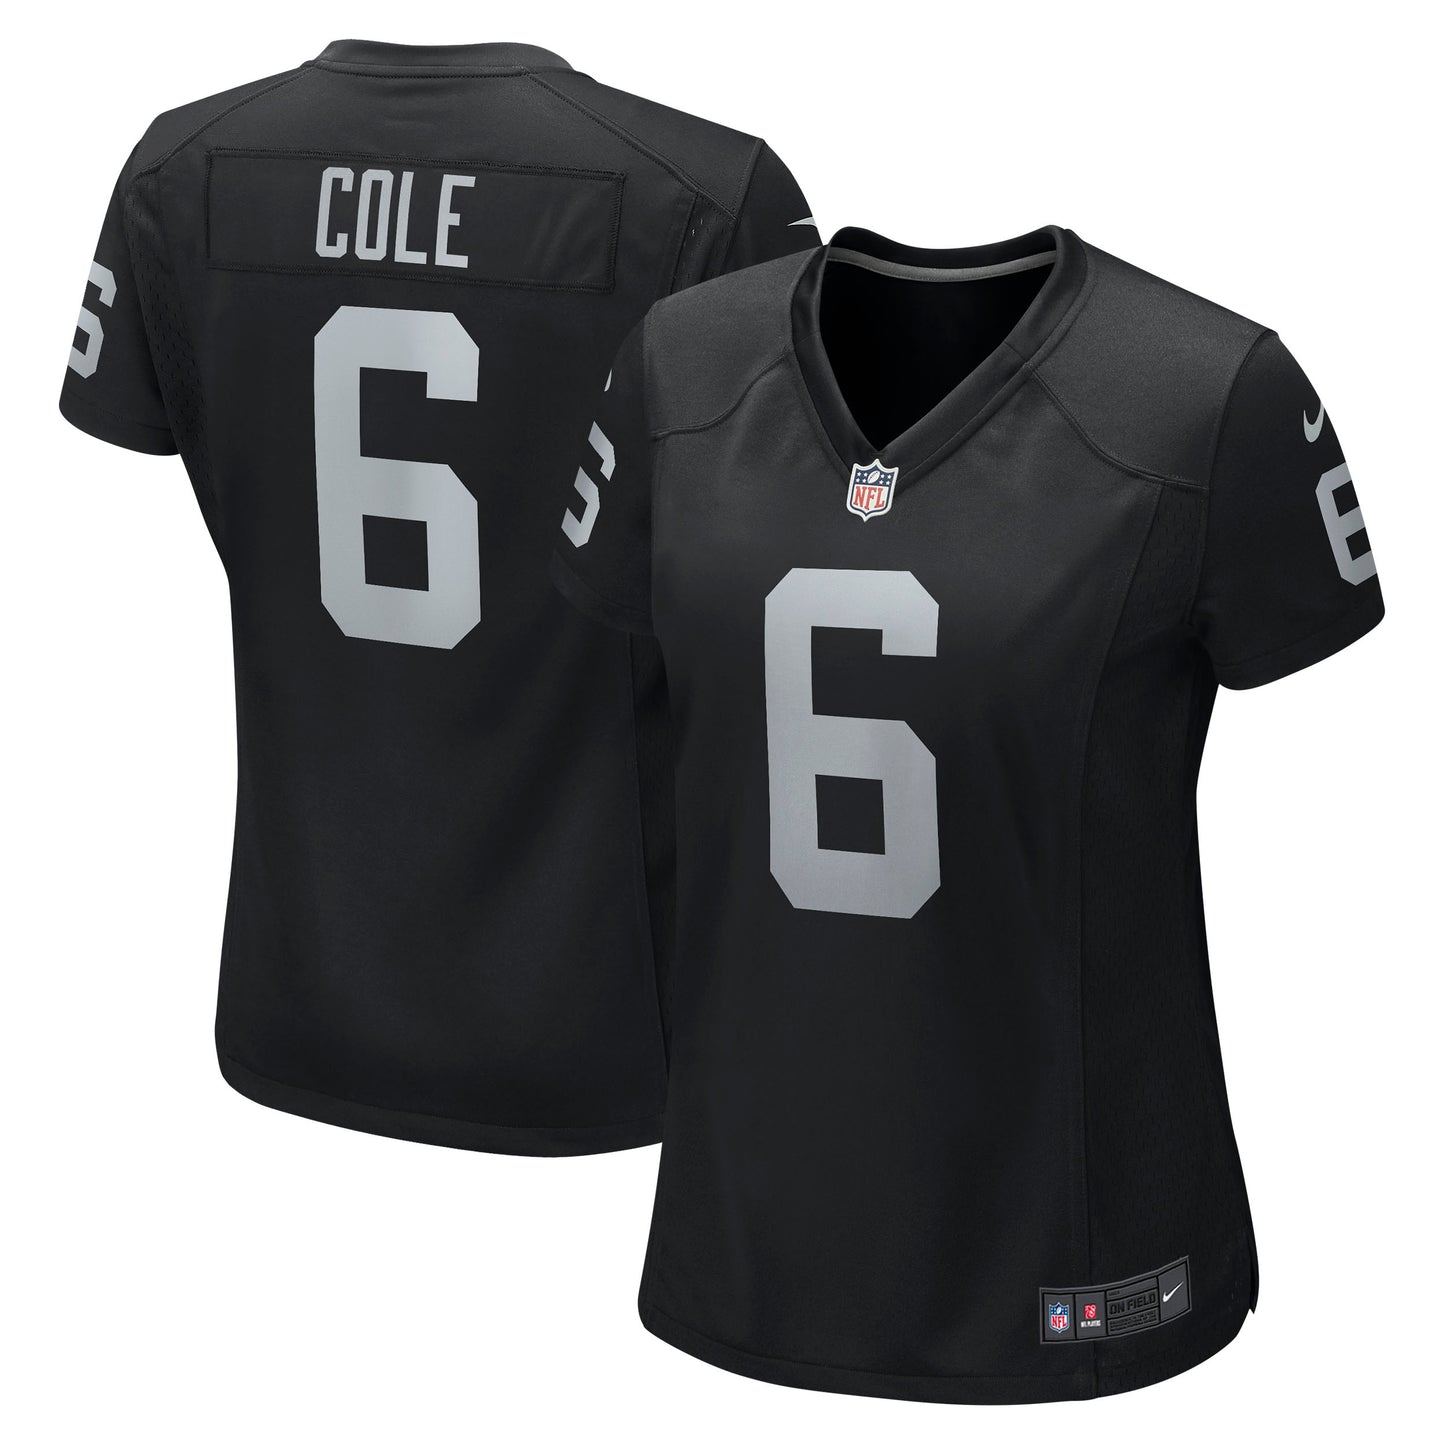 AJ Cole Las Vegas Raiders Nike Women's Game Jersey - Black